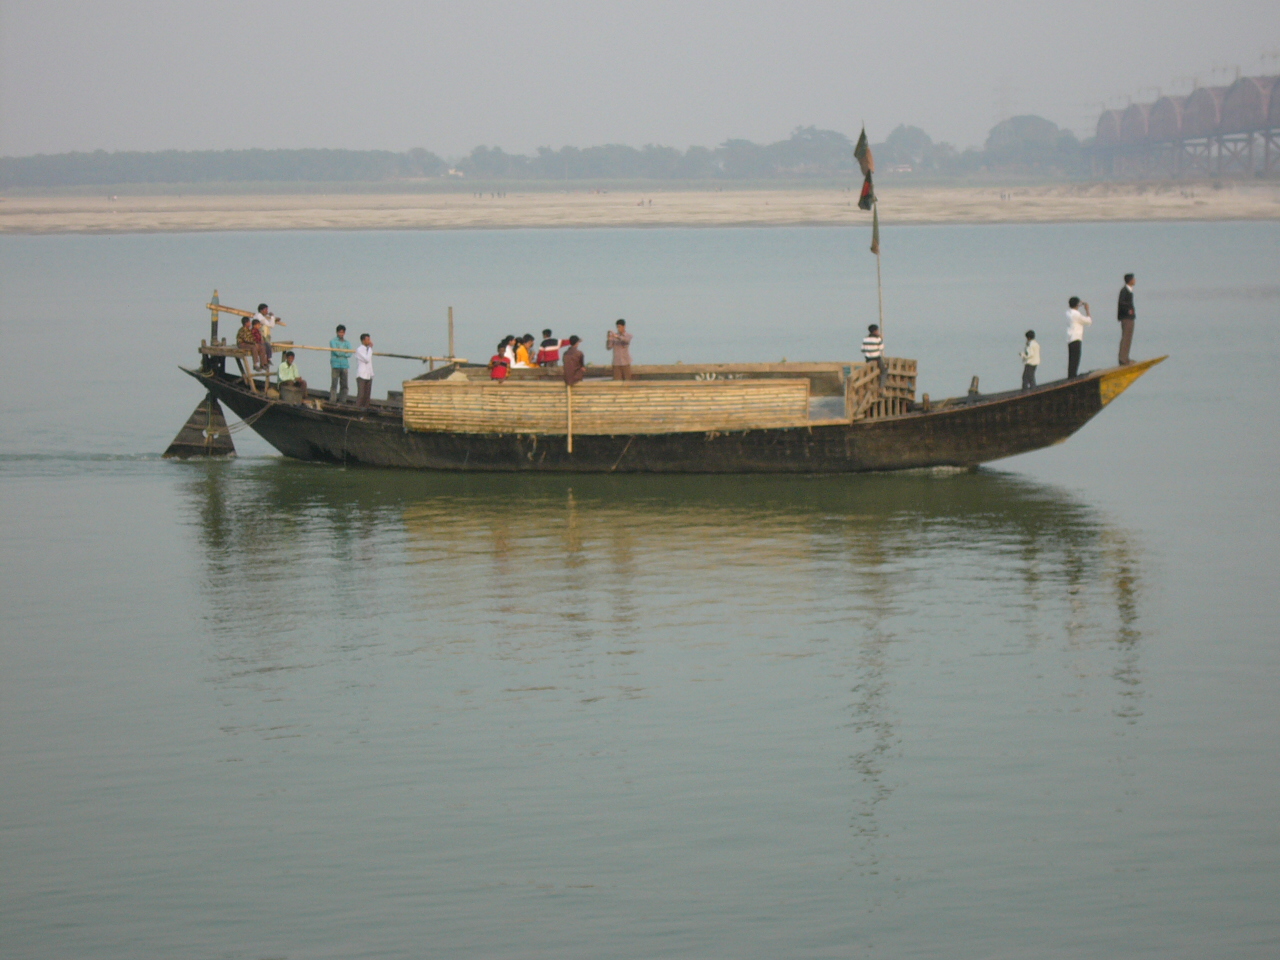 File:Boats Bangladesh.JPG - Wikipedia, the free encyclopedia